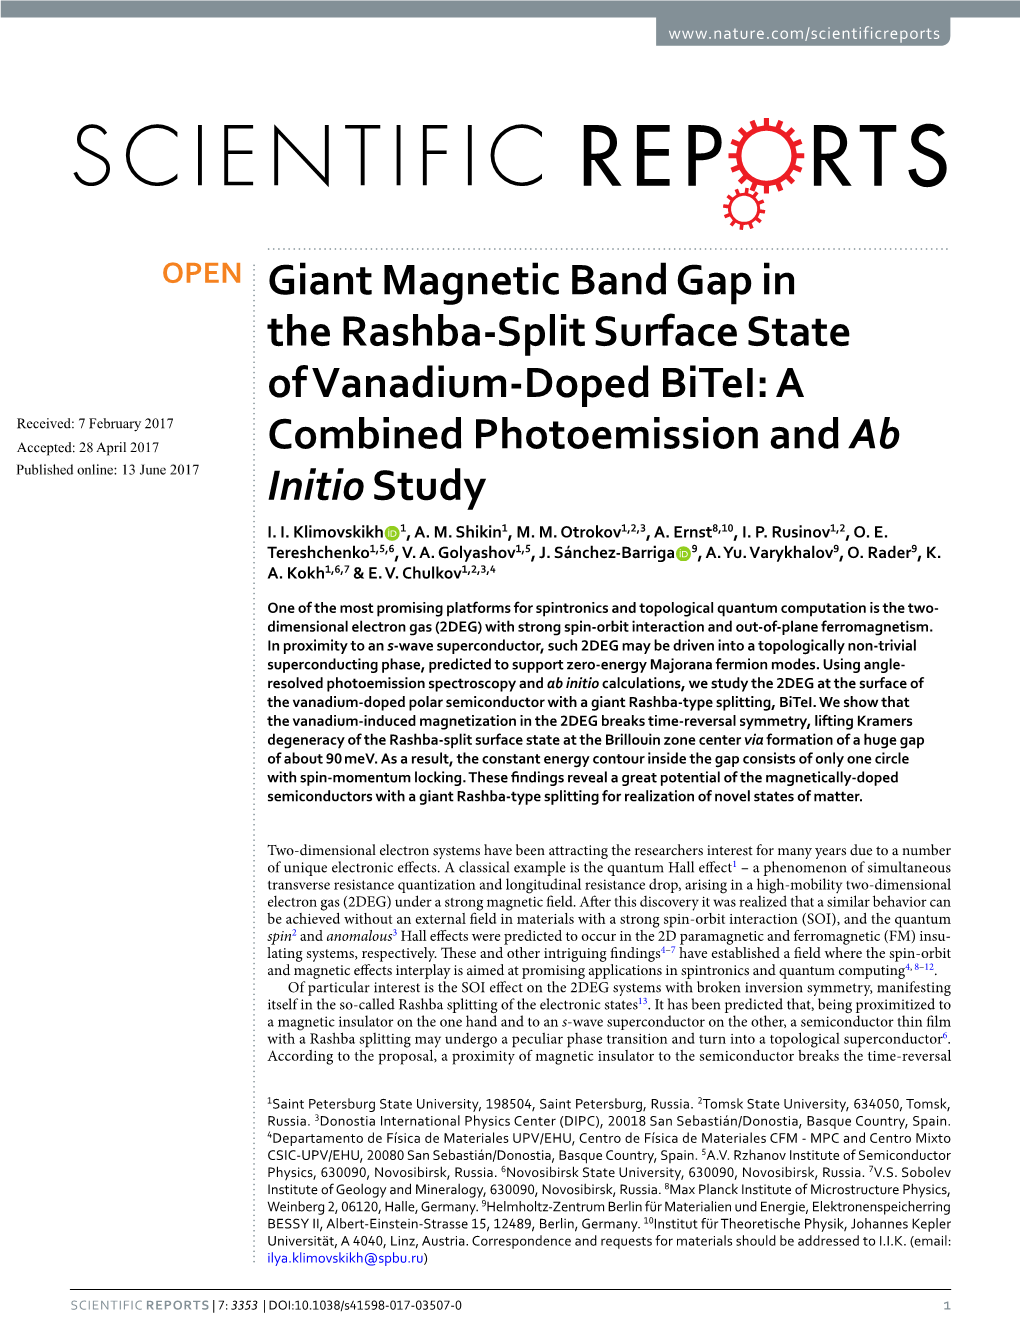 Giant Magnetic Band Gap in the Rashba-Split